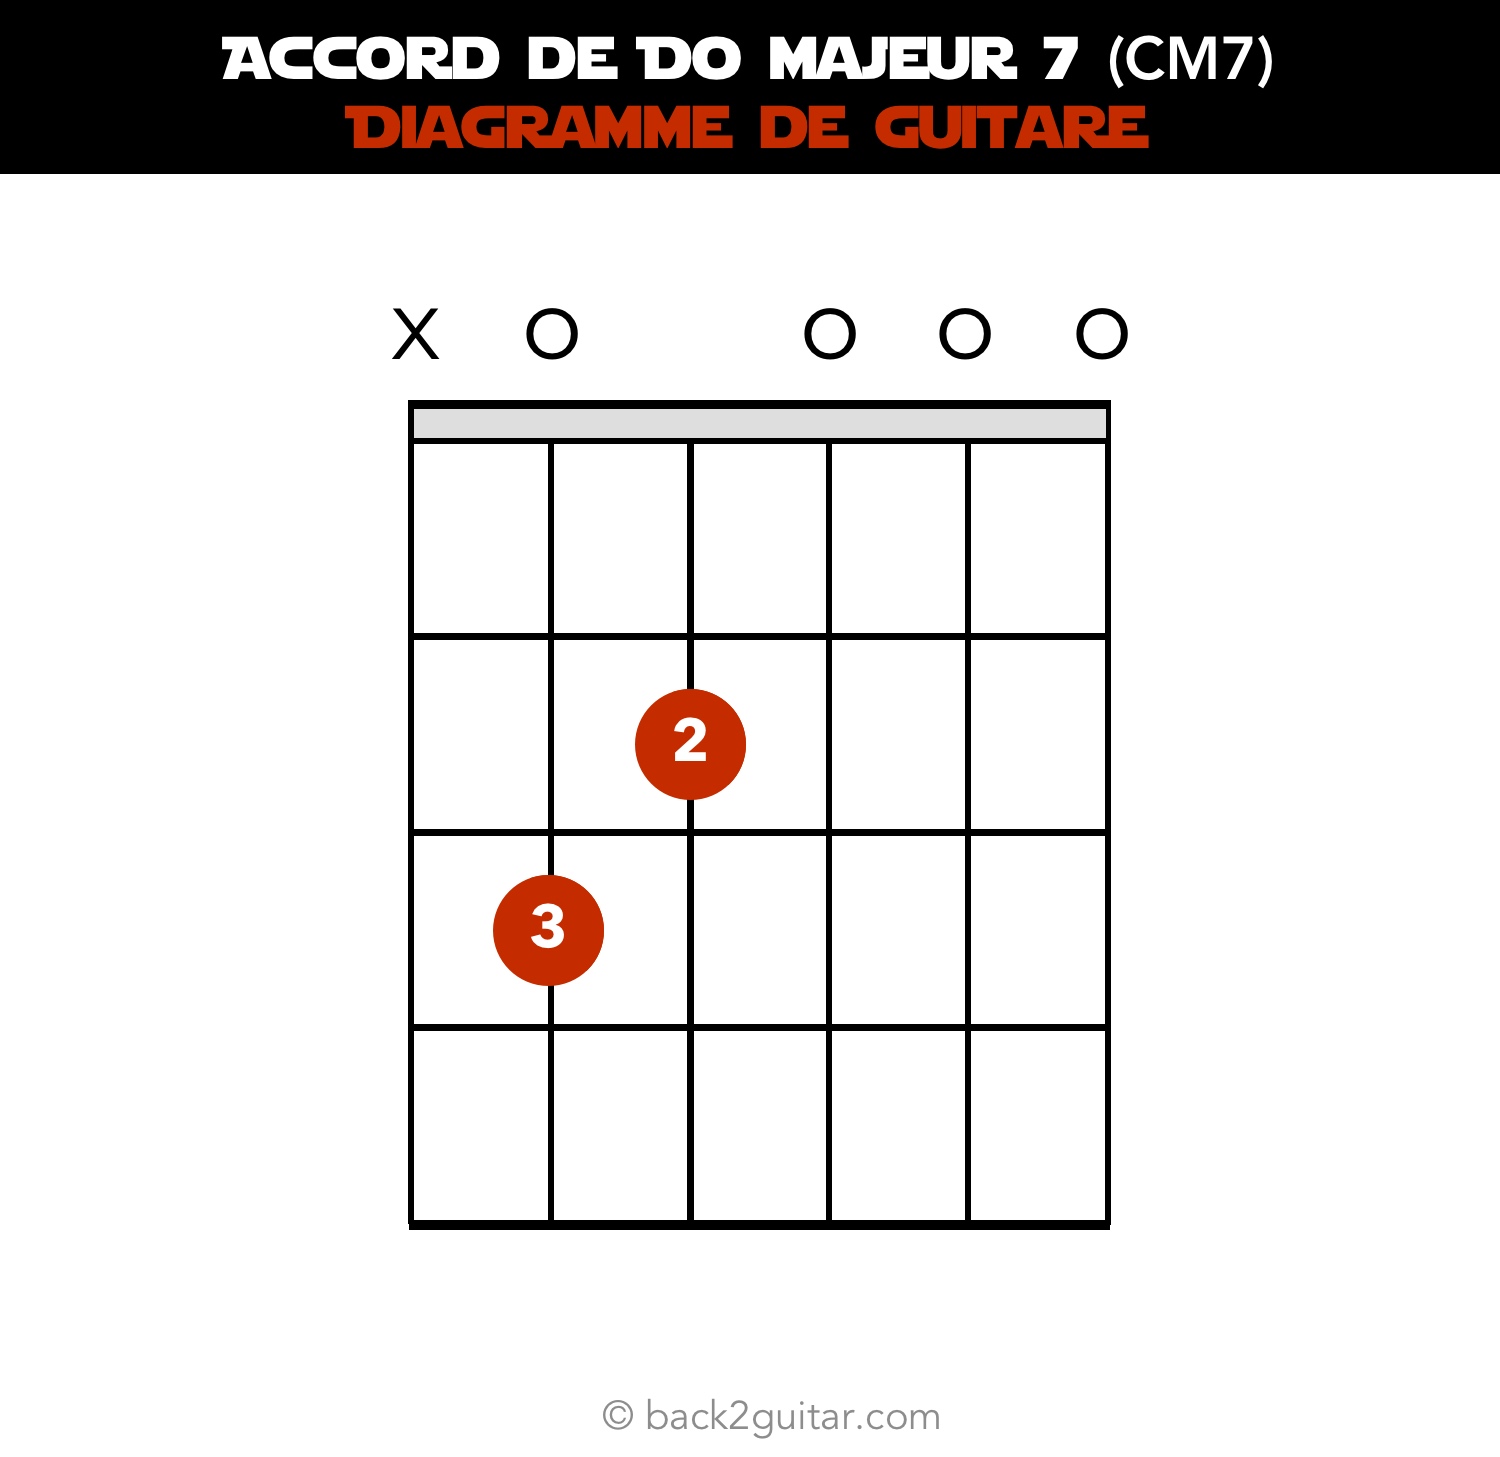 accord guitare do majeur 7 diagramme guitare (CM7)